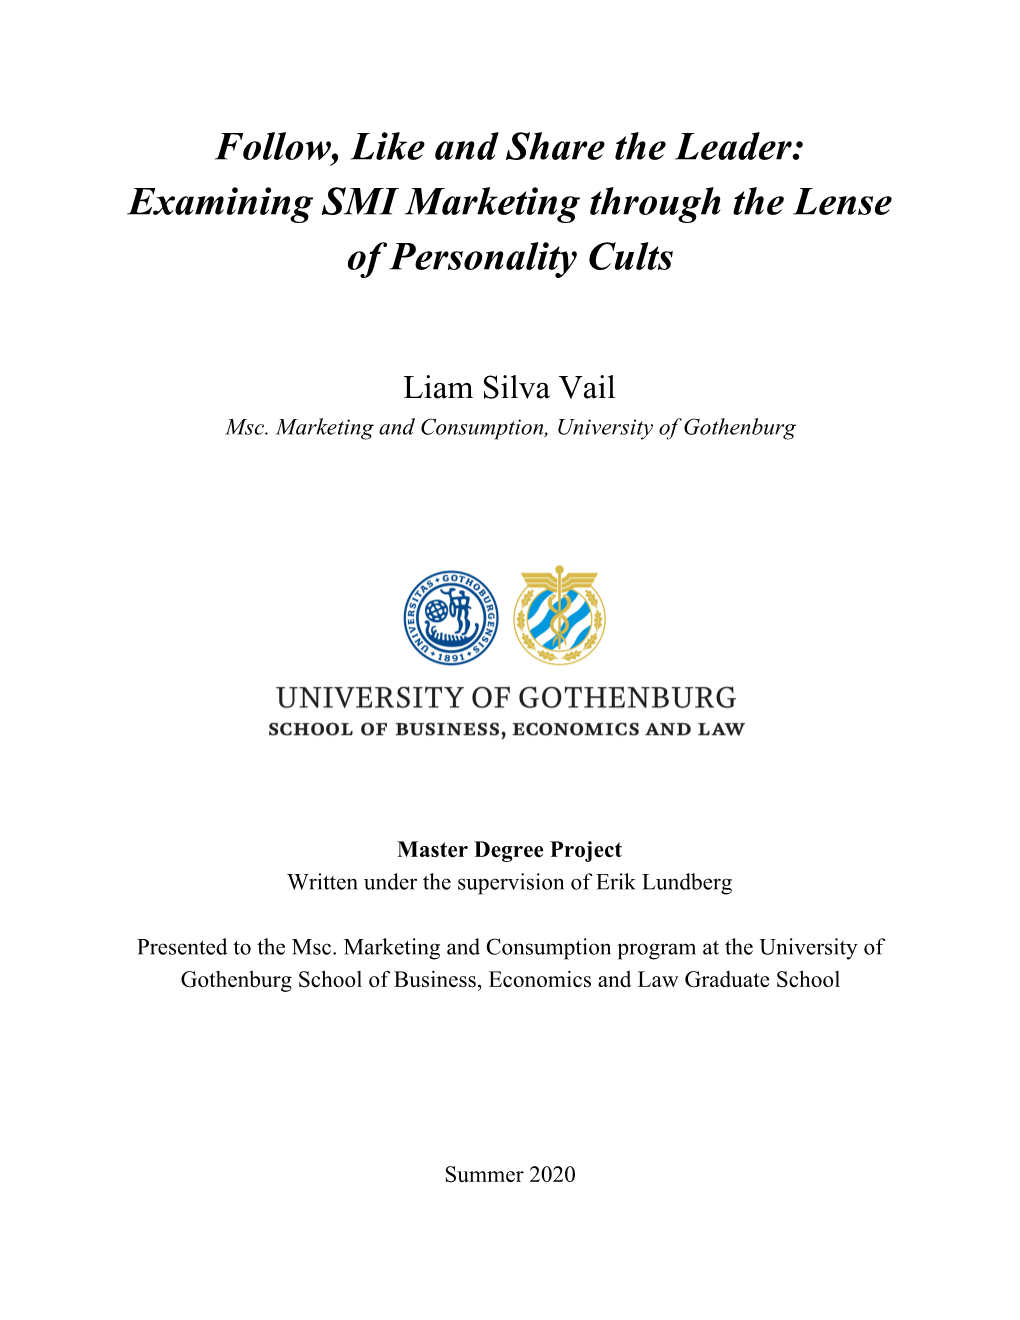 Examining SMI Marketing Through the Lense of Personality Cults